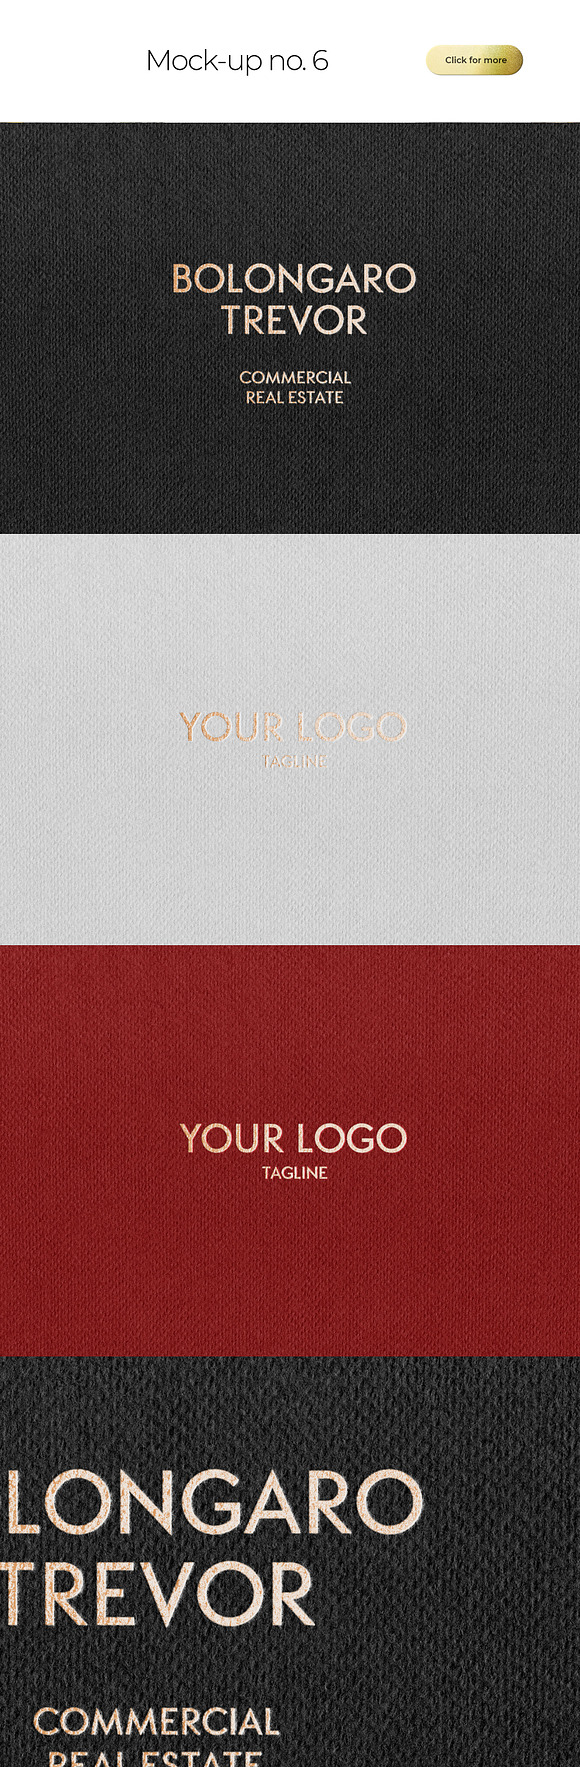 50 logo mockup branding bundle in Branding Mockups - product preview 7